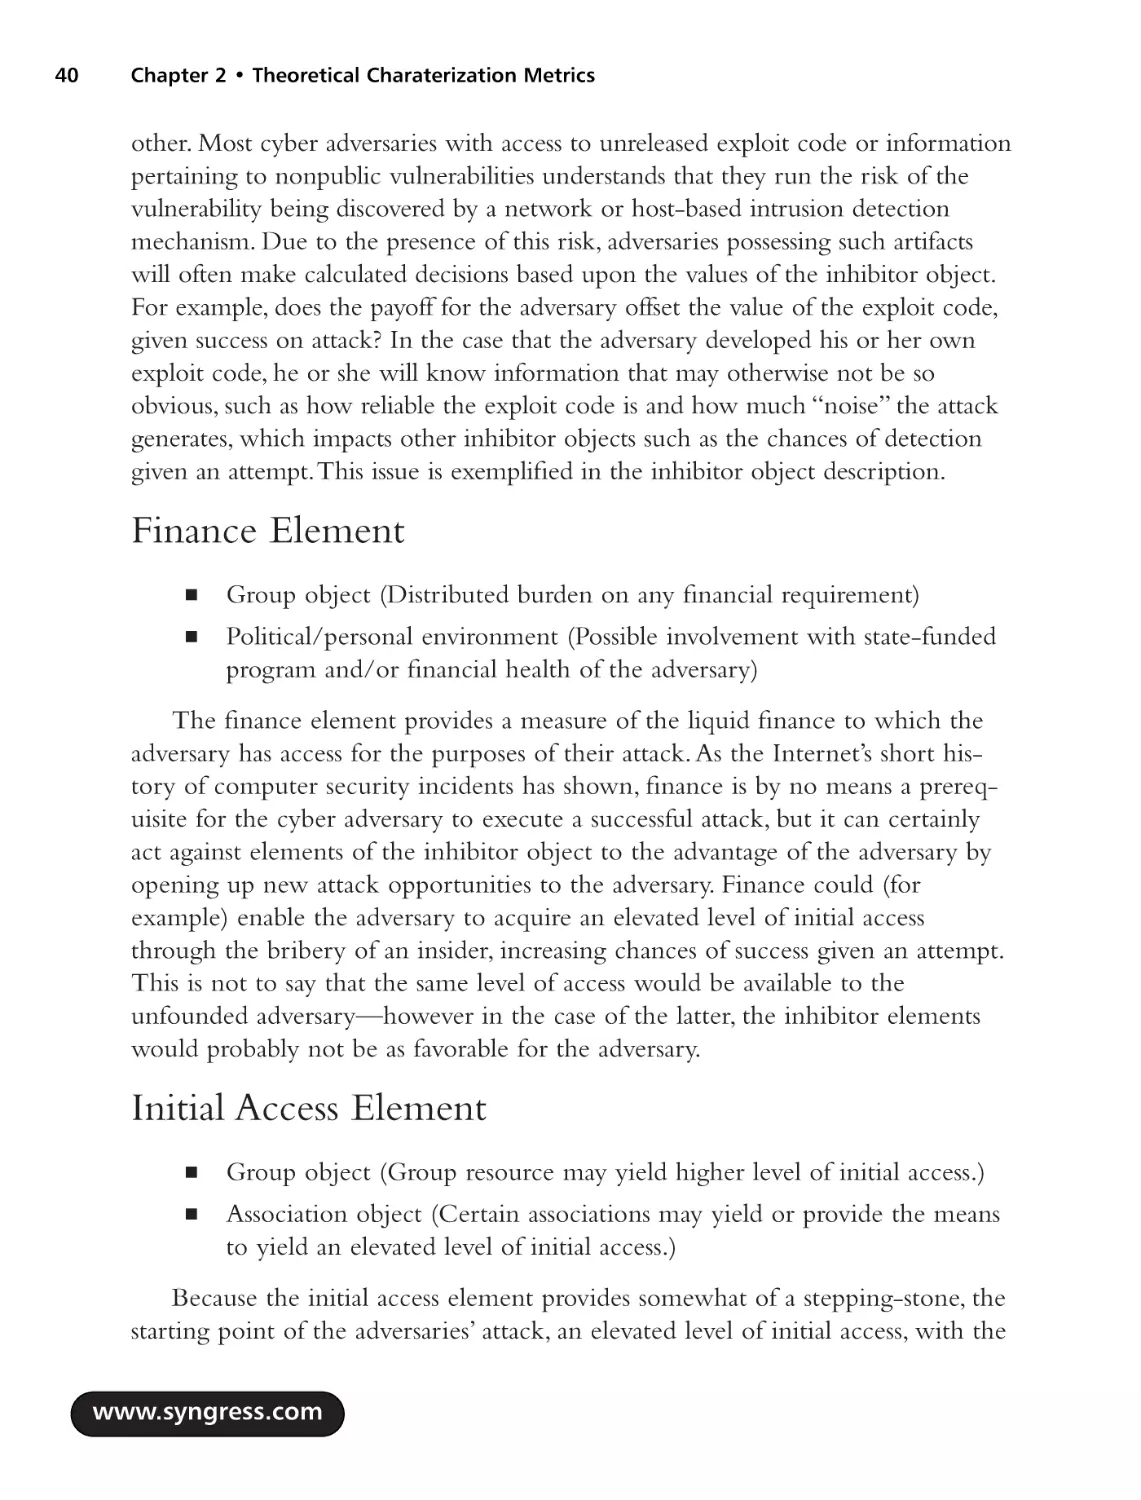 Finance Element
Initial Access Element